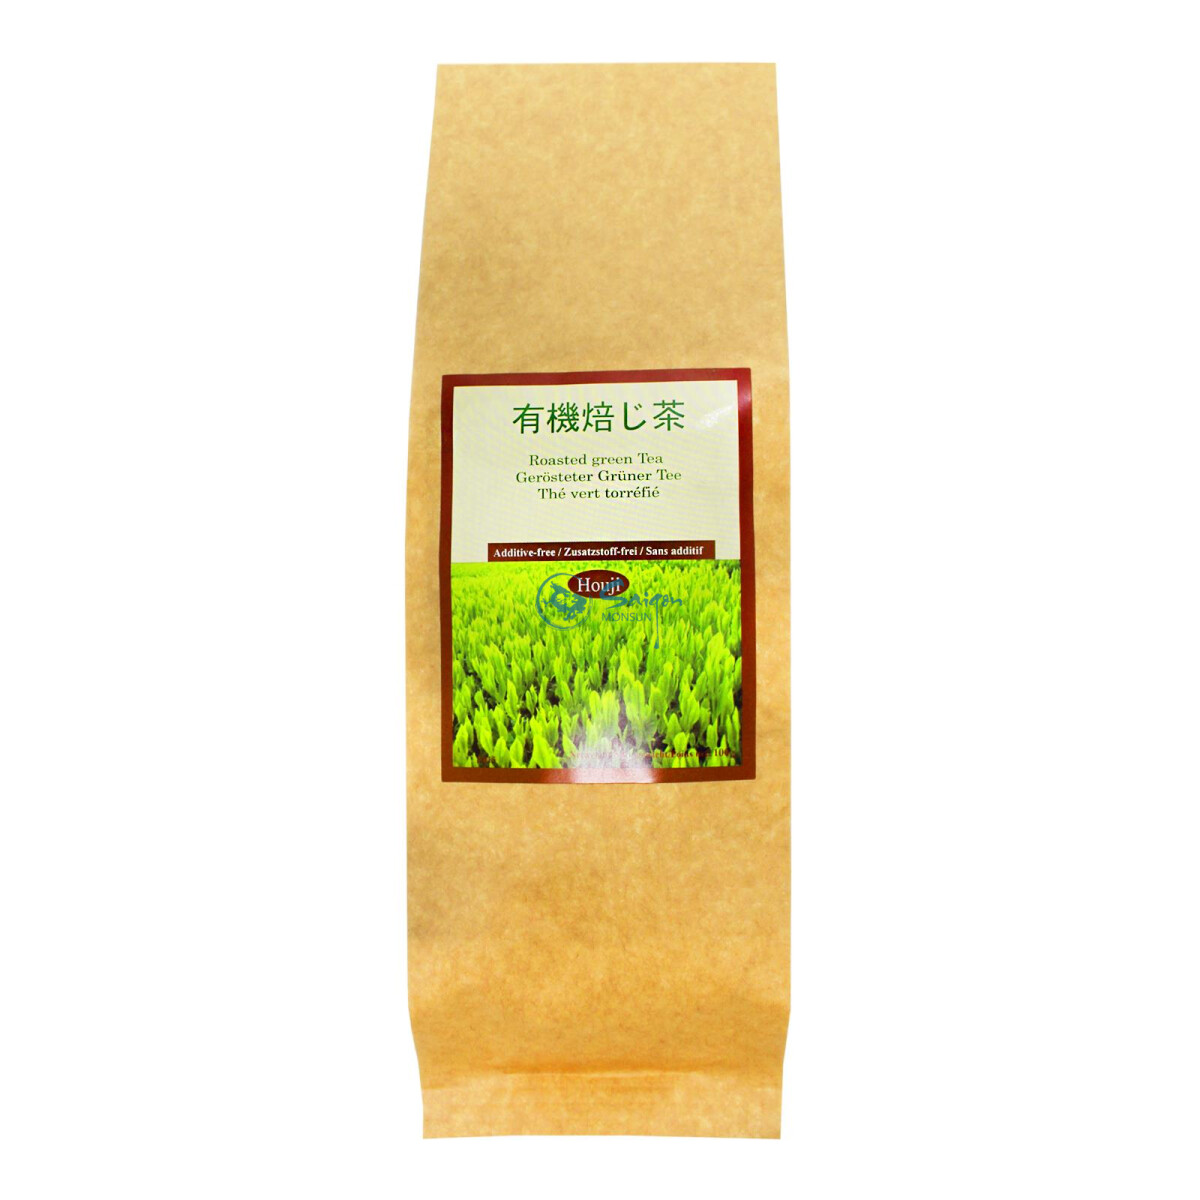 Hojicha Houji Gerösteter Grüner Tee 100g